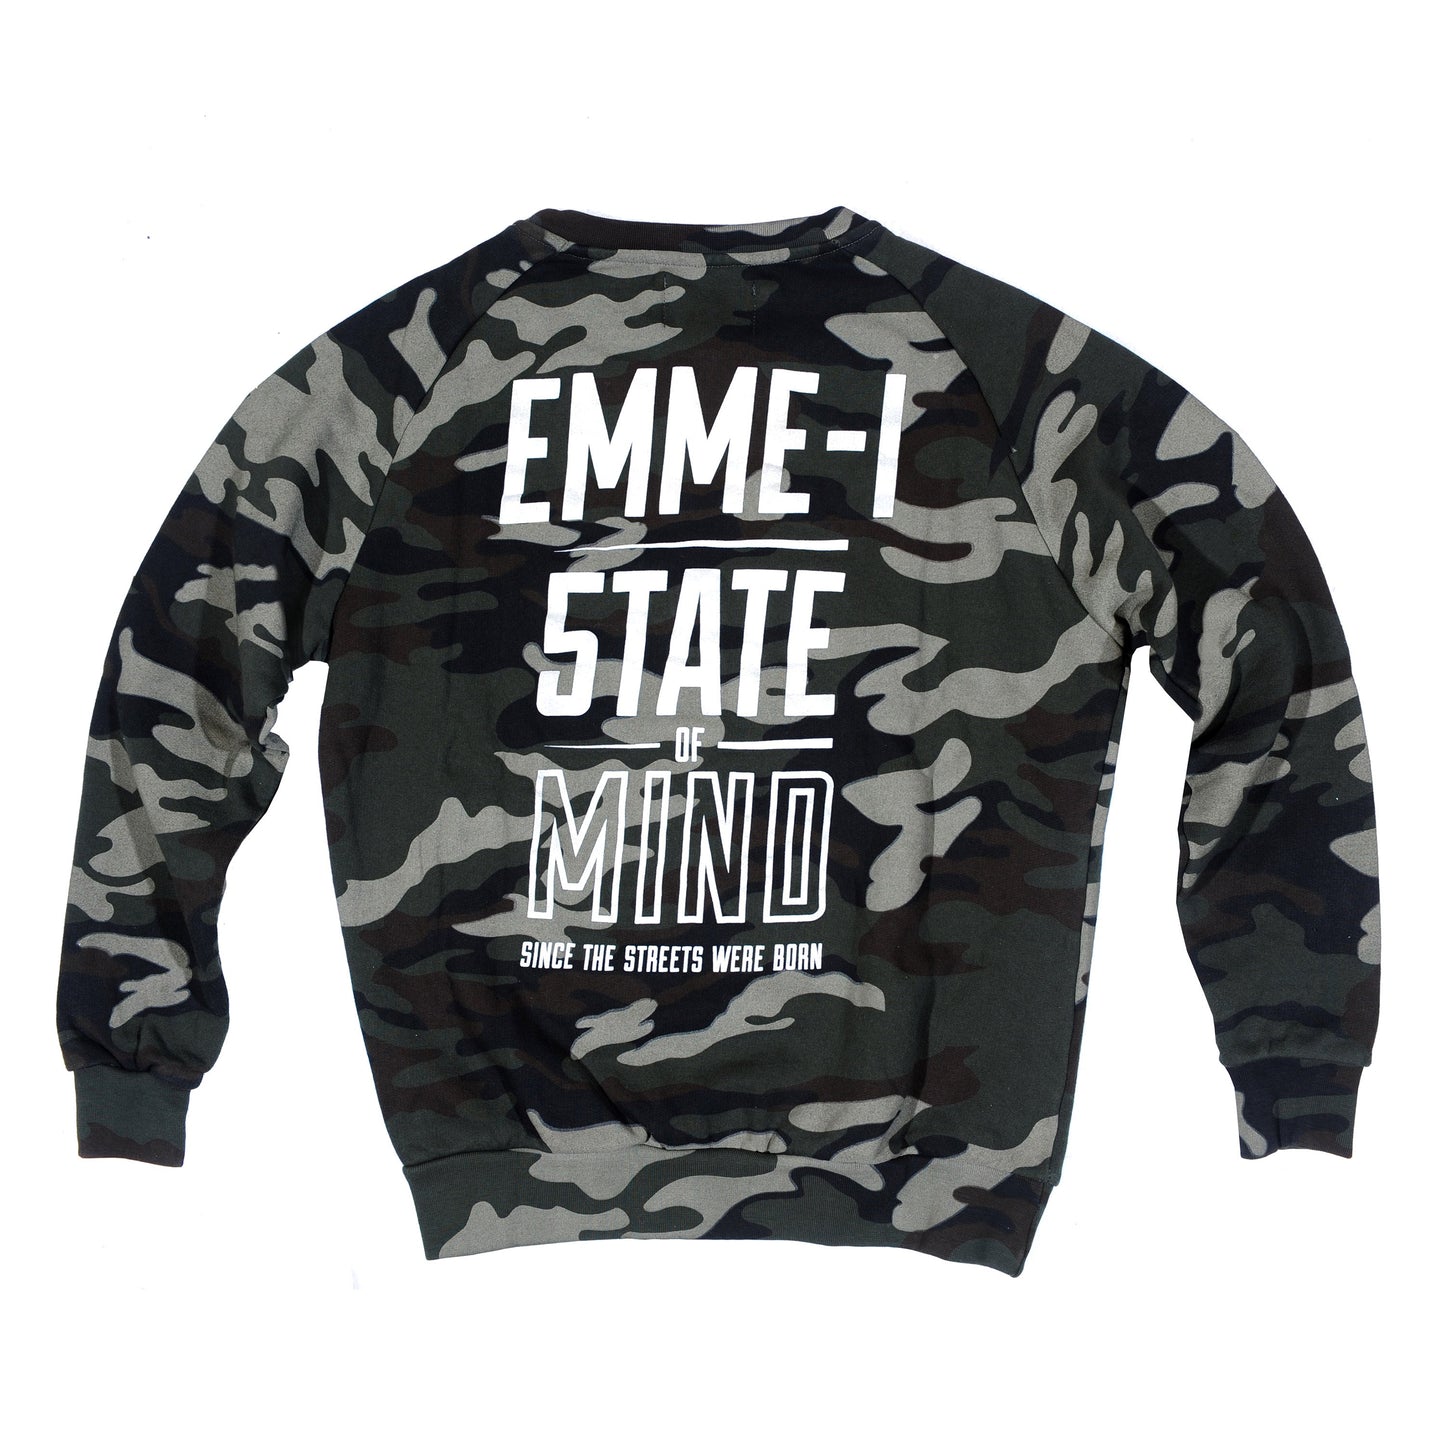 "EMME-I CELEBRATION" <br /> tundra camo sweatshirt